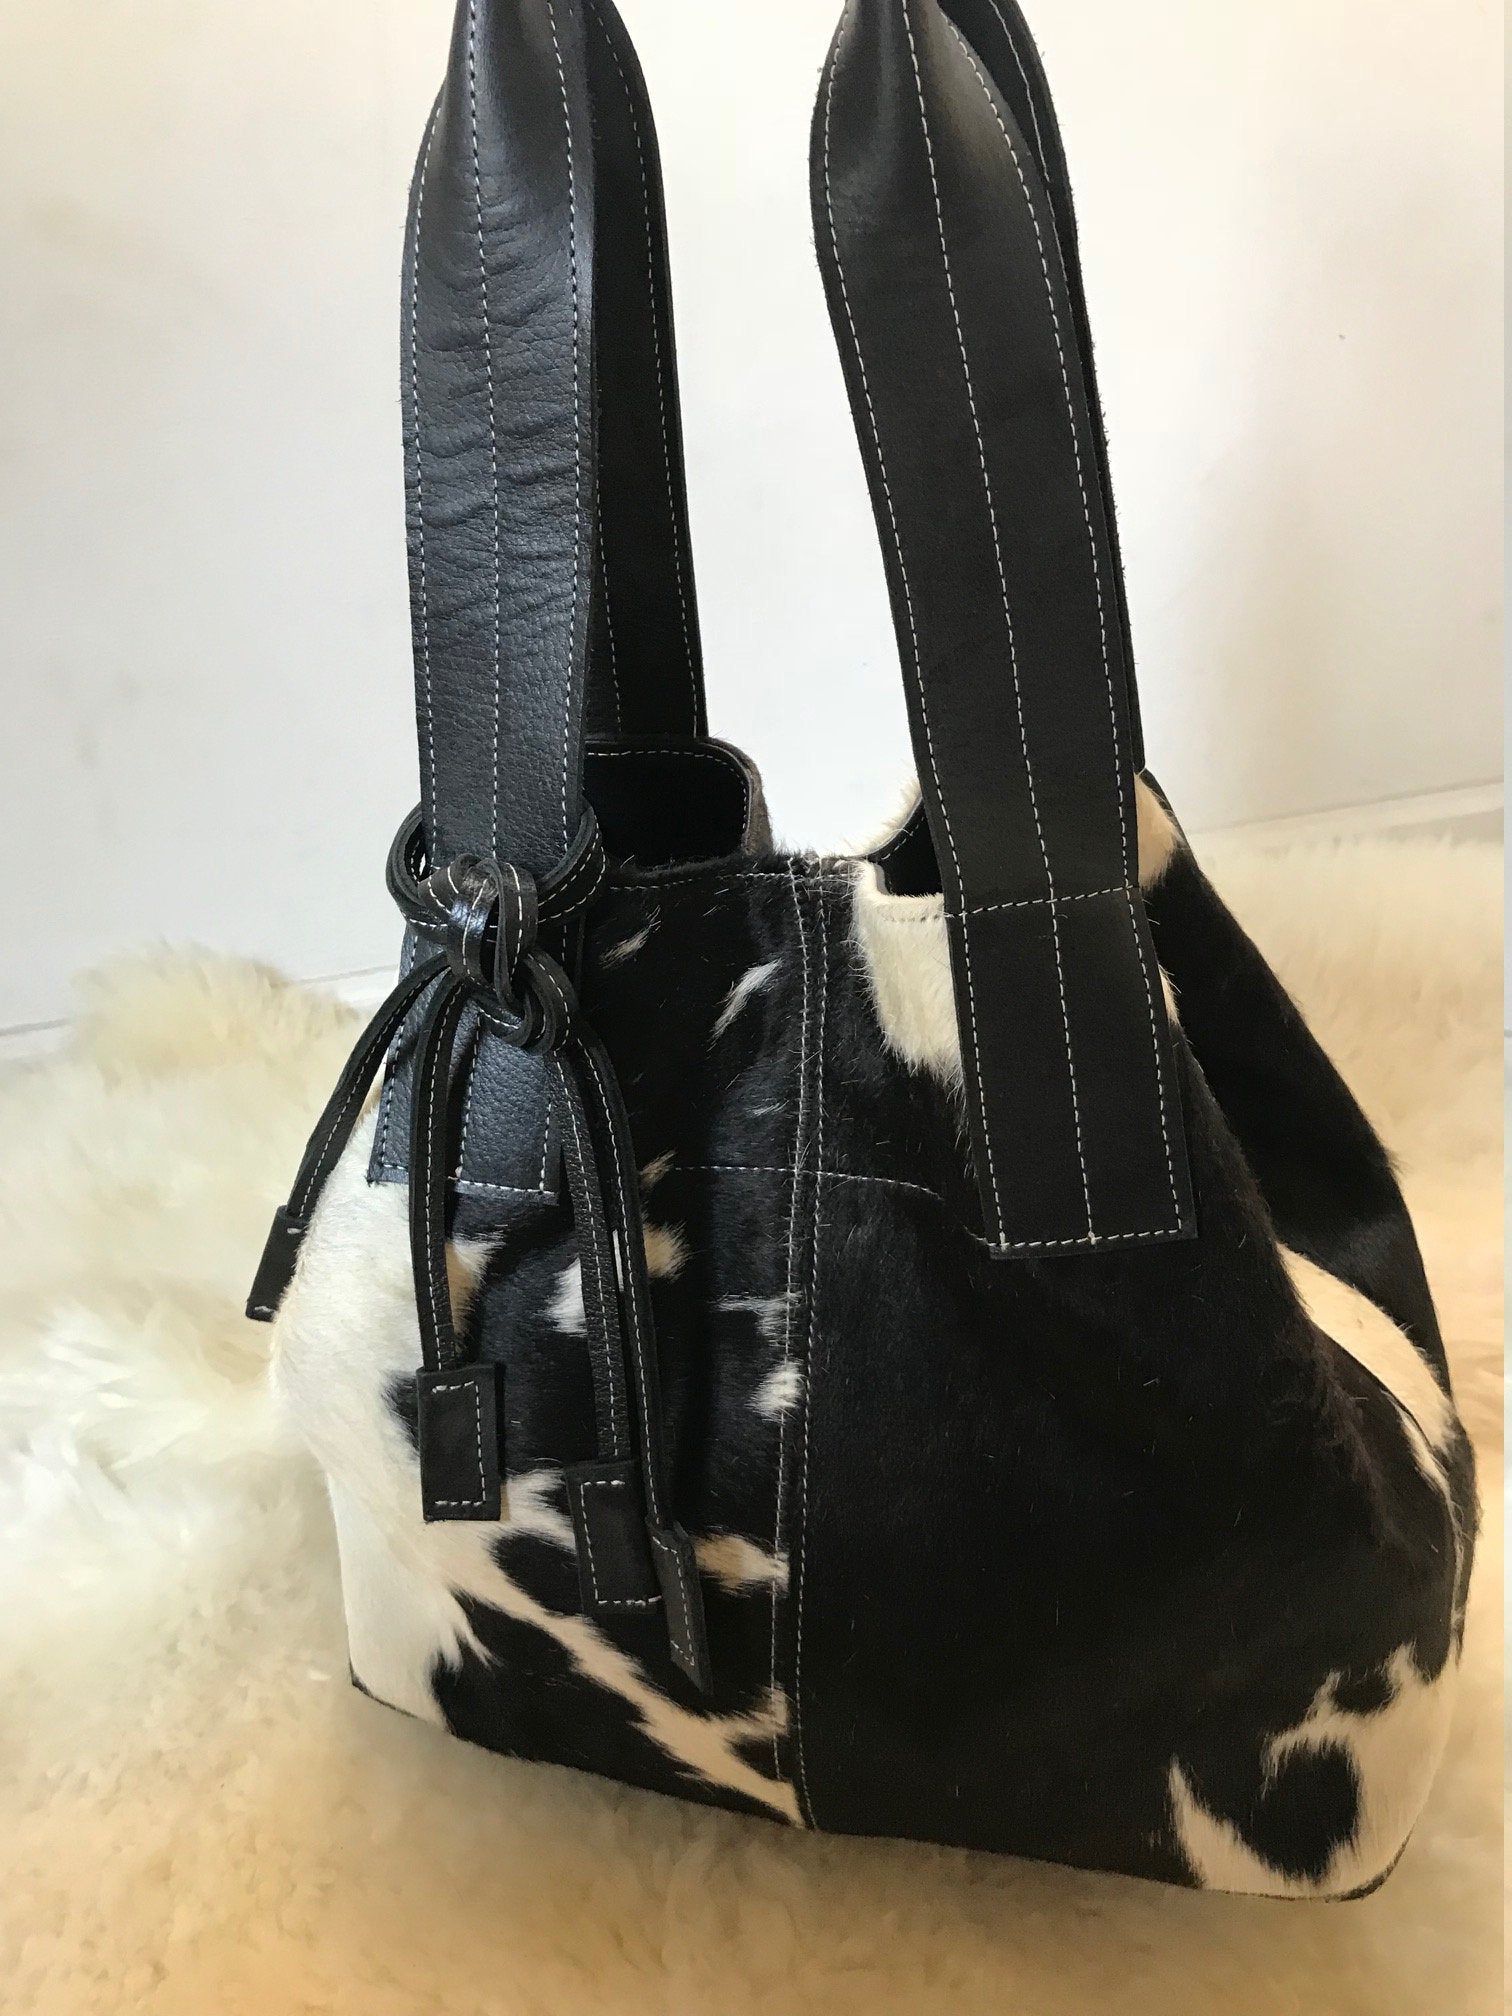 Cowhide  Purse Unique Piece Cow Hide Handbag. Leather Bag